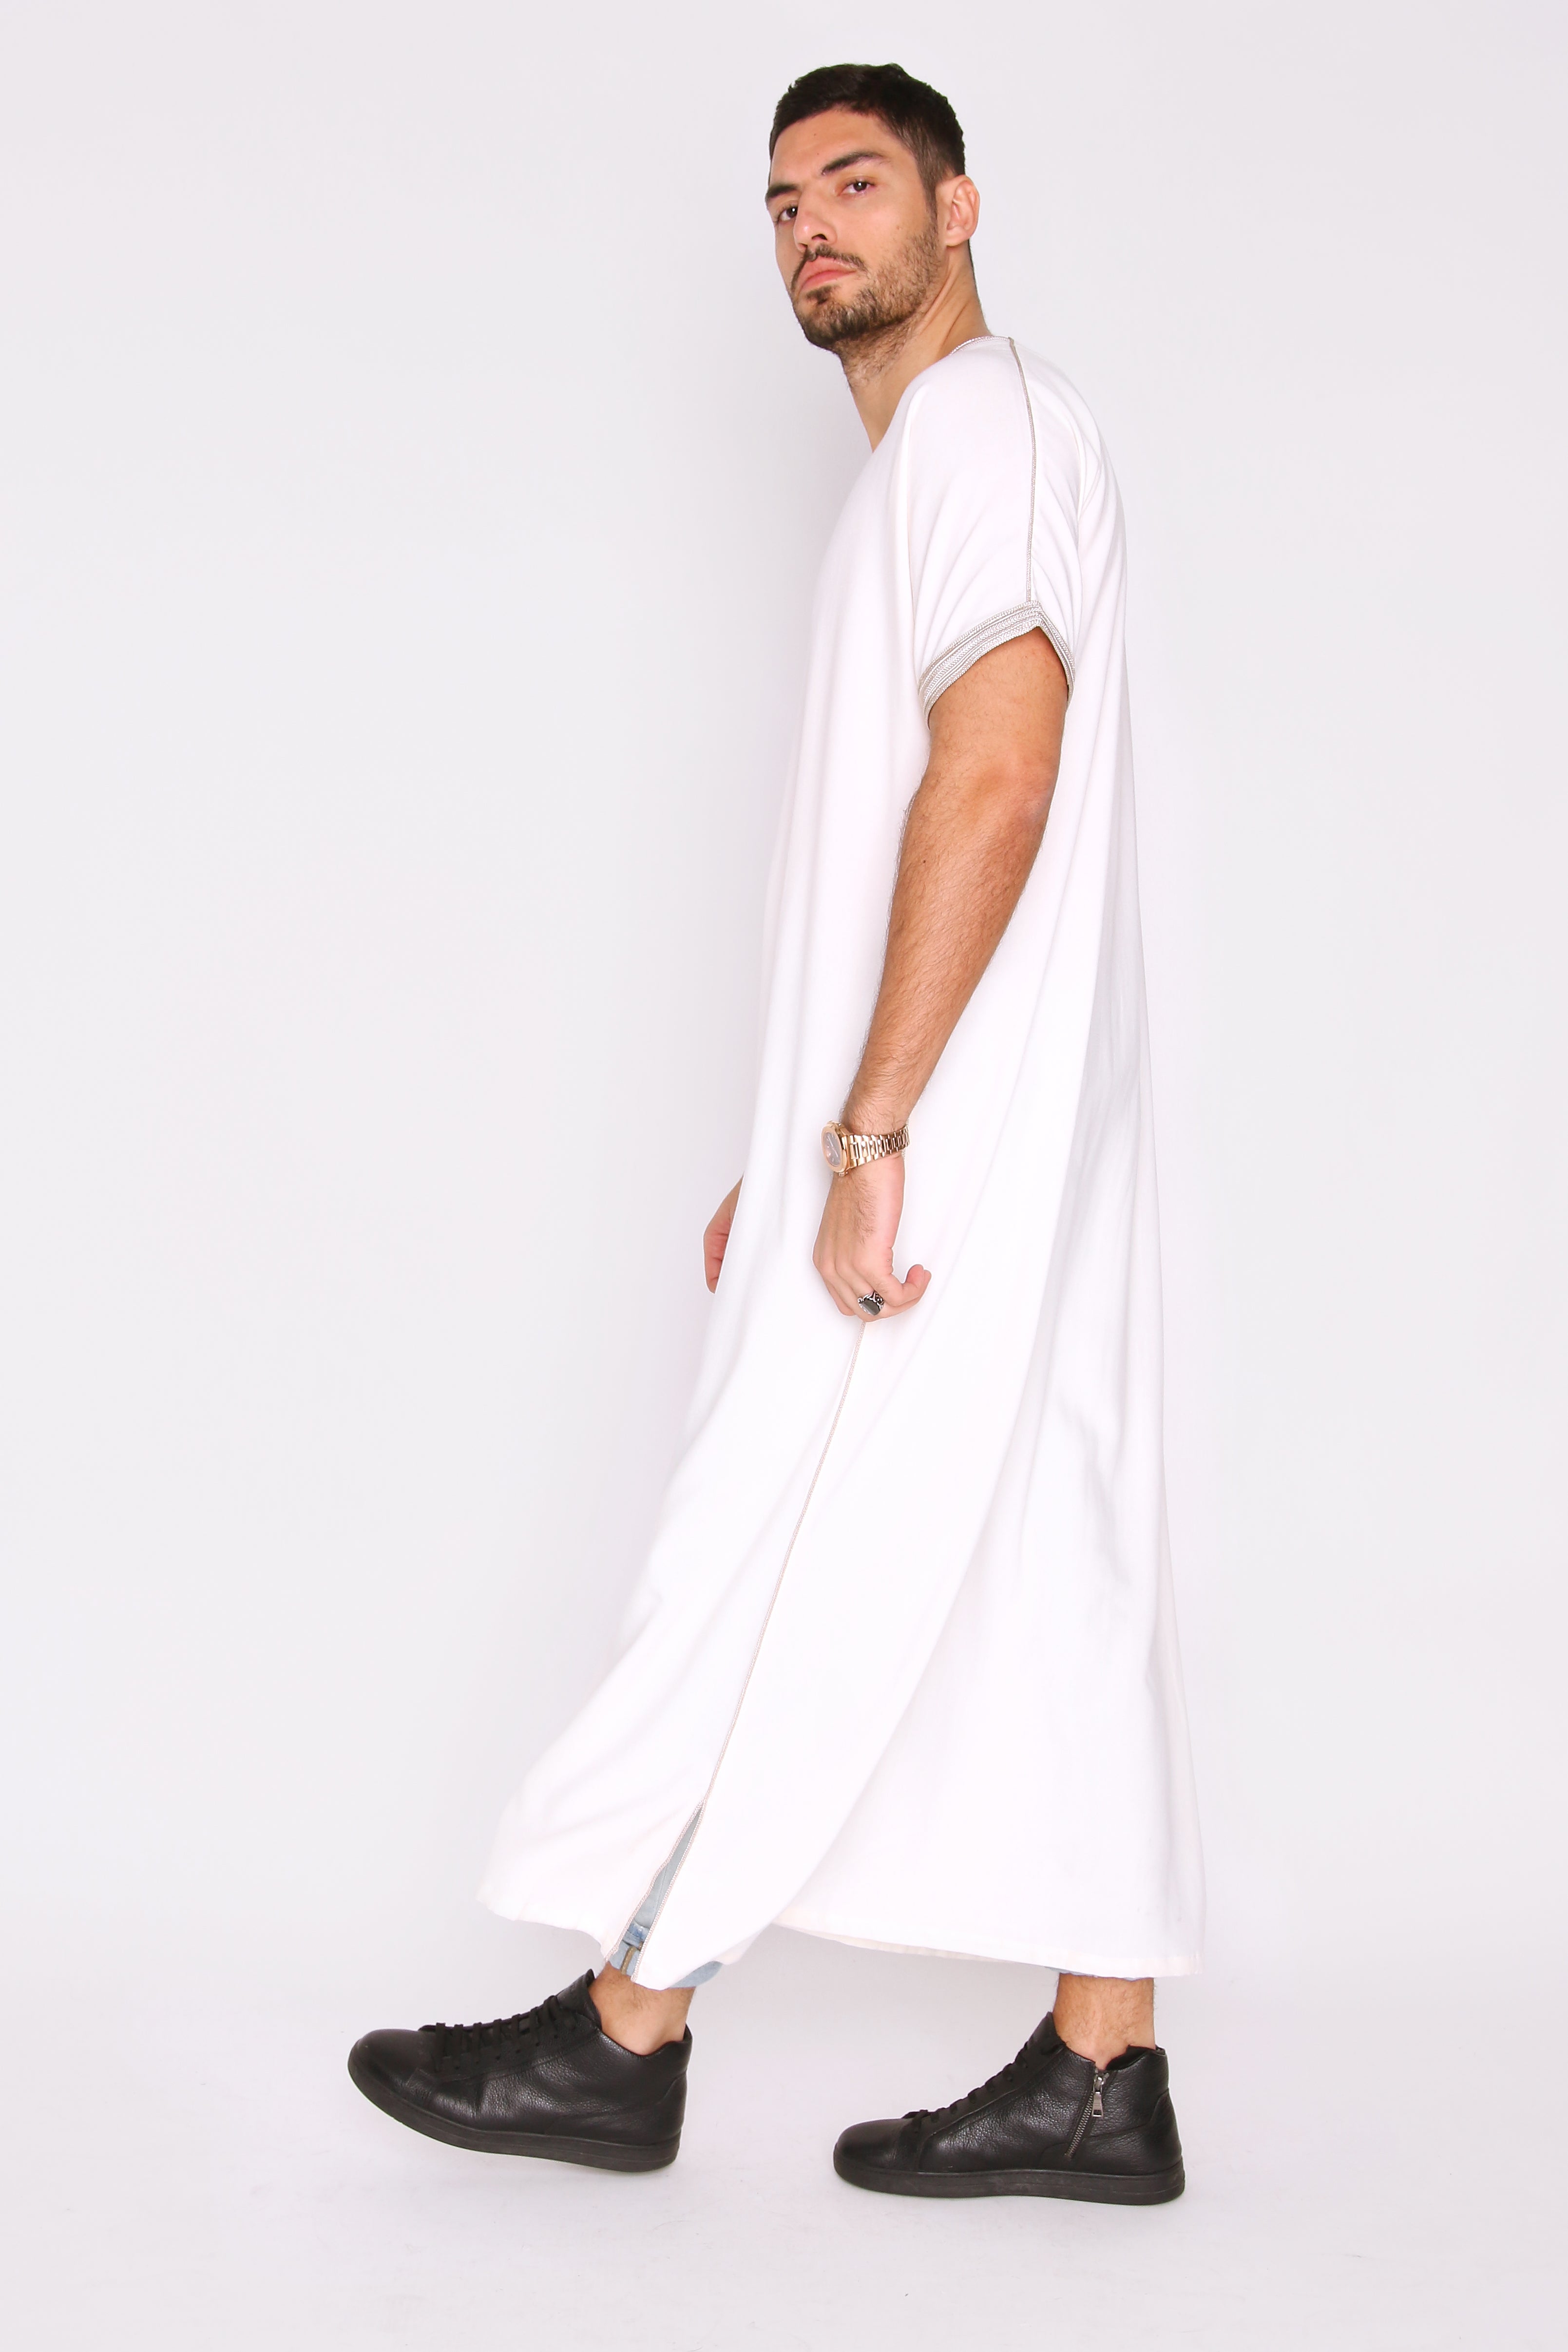 Gandoura Dolphy Men's Short Sleeve V-Neck Robe Thobe in White